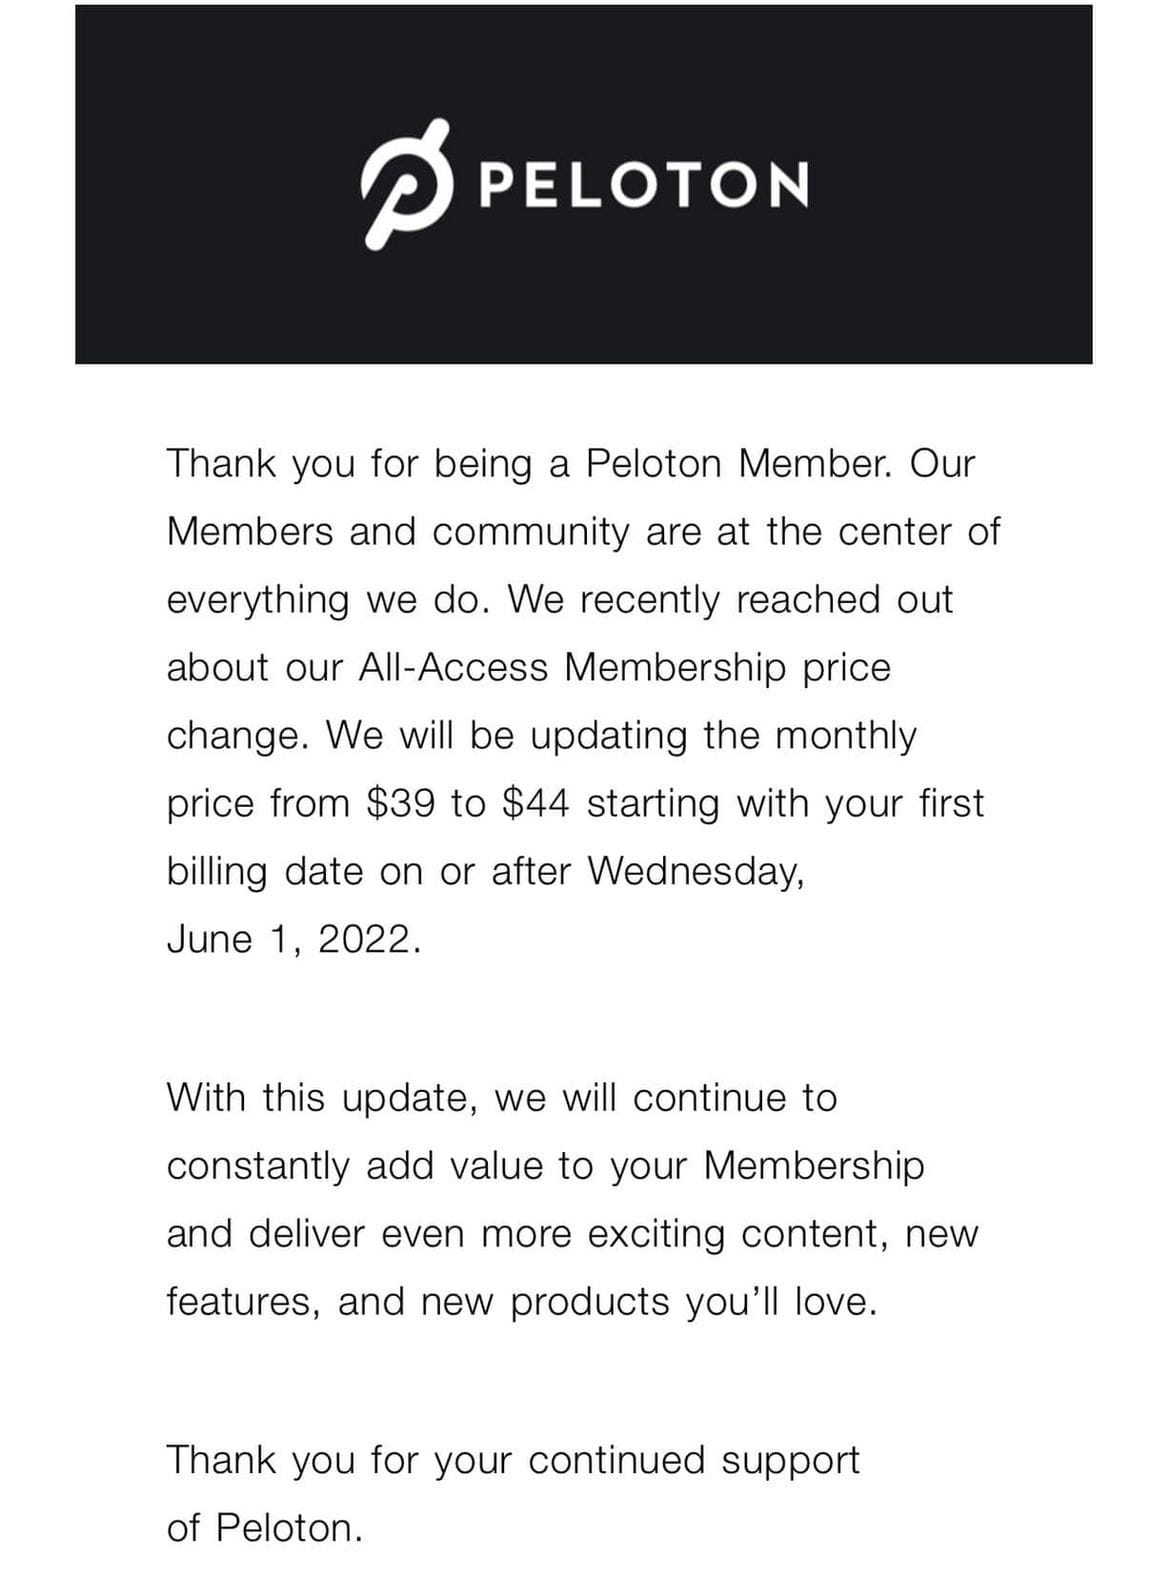 Peloton's price increase reminder email.